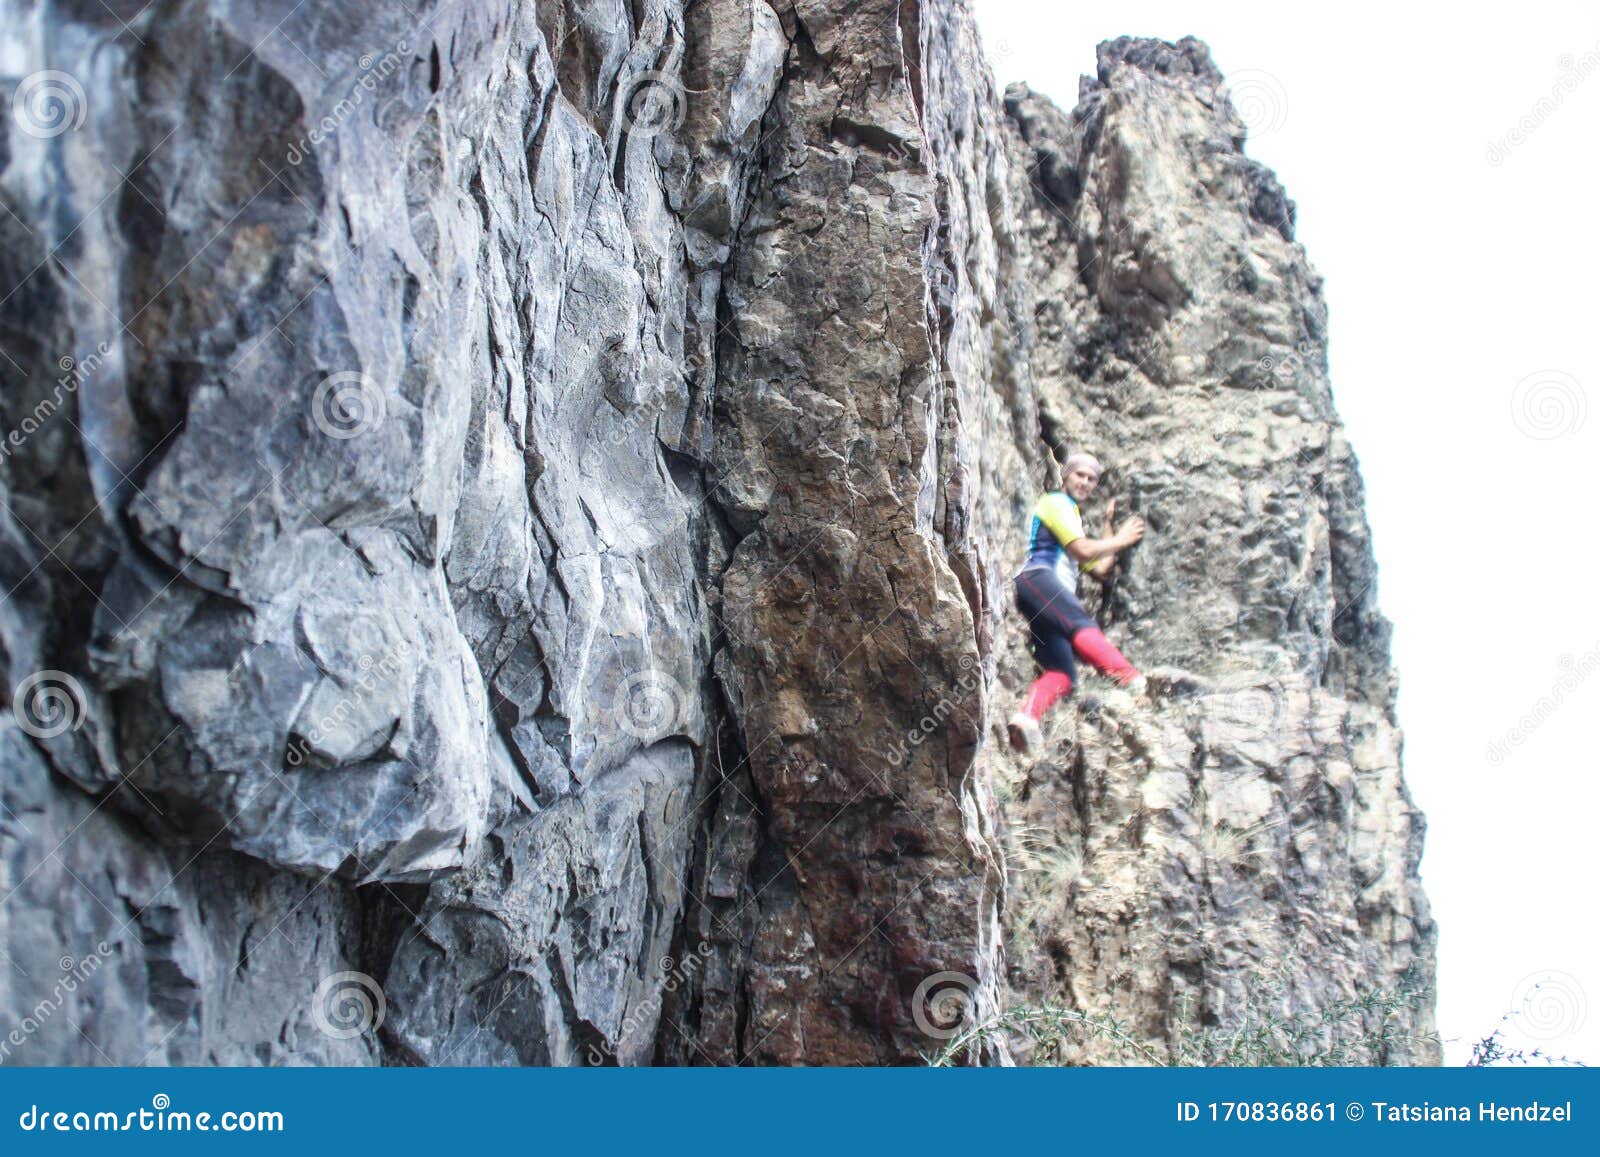 alpinism i roci varicoase)